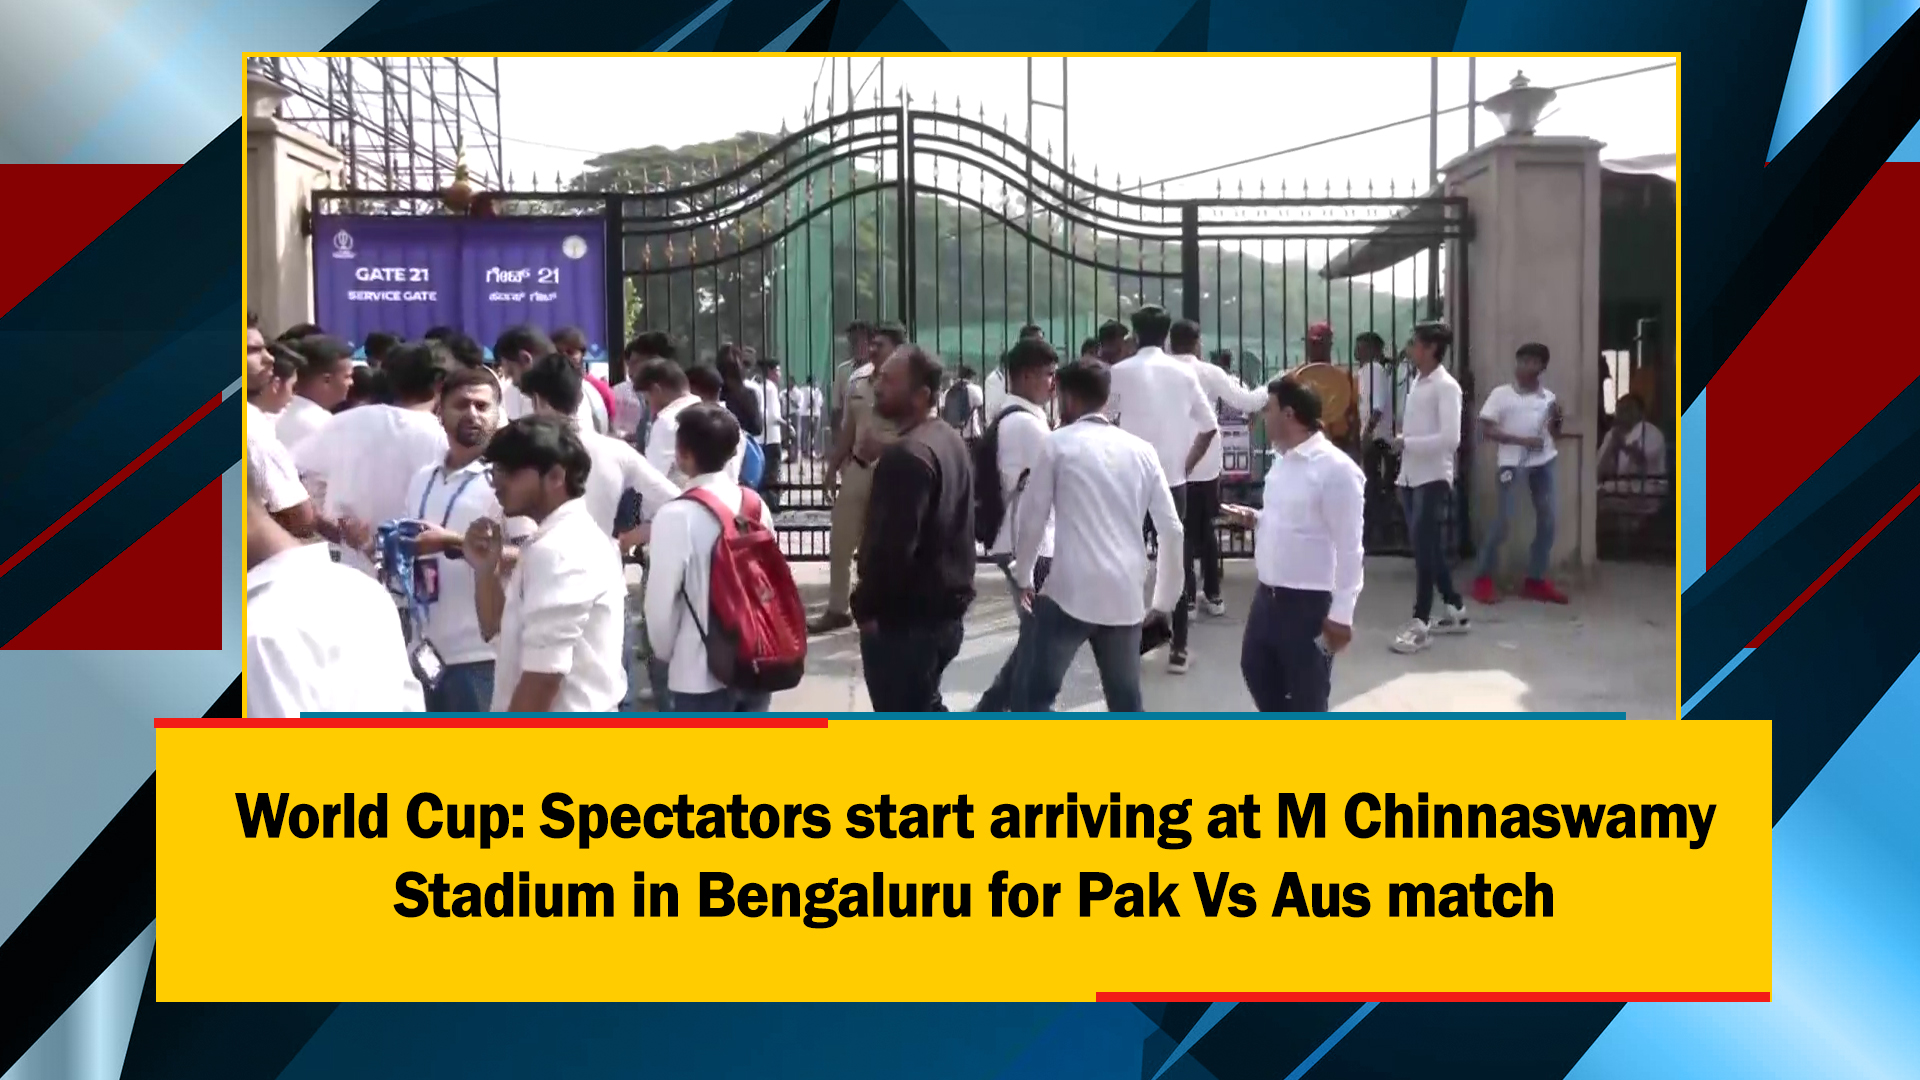 World Cup: Spectators start arriving at M Chinnaswamy Stadium in Bengaluru for Pak Vs Aus match